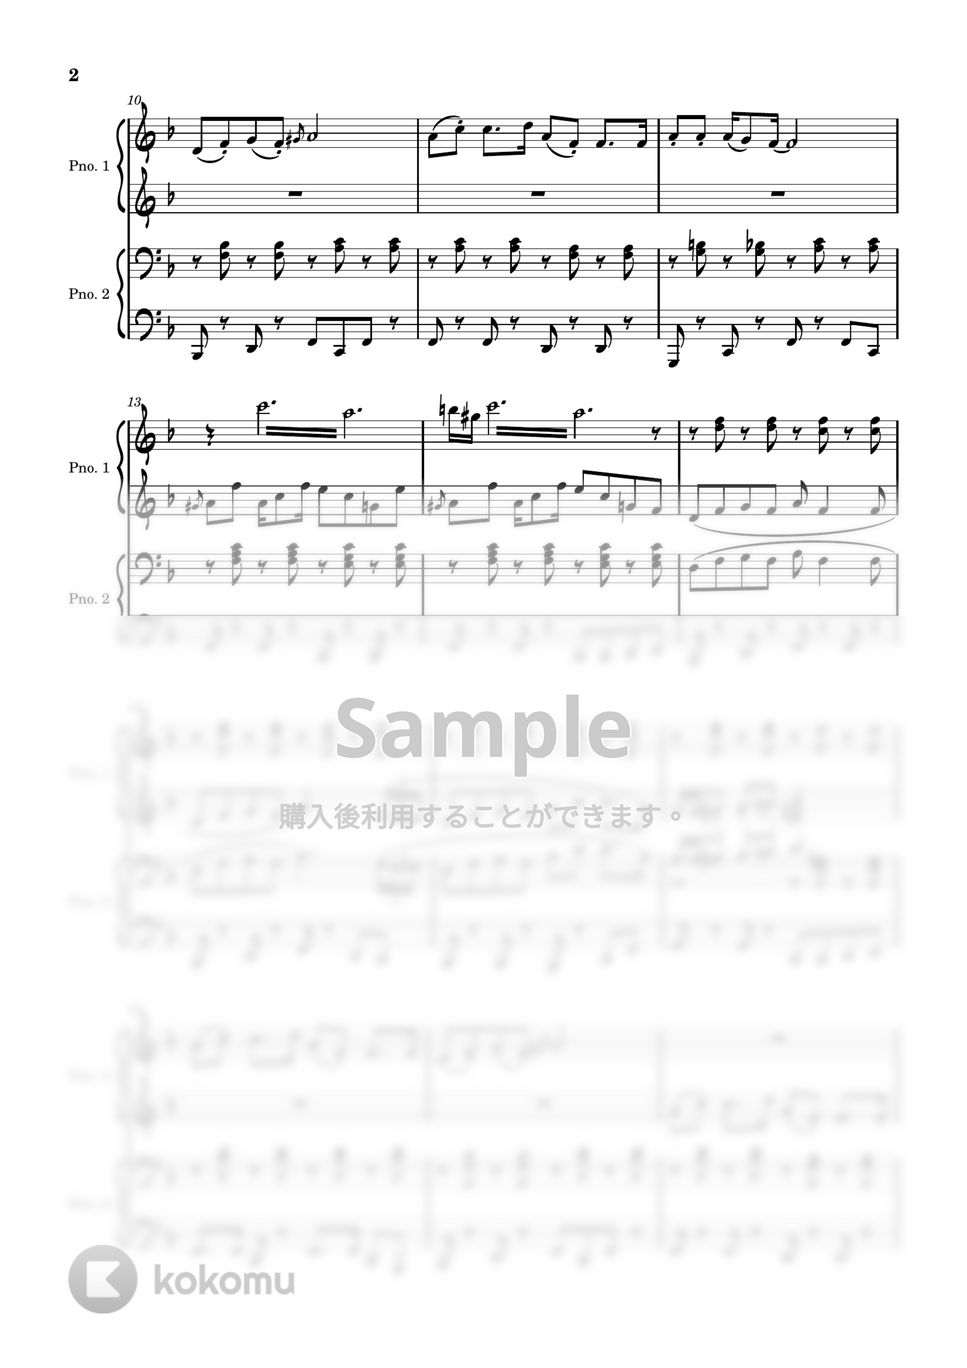 SHERMAN RICHARD M - All Aboard The Mine Train (ピアノ連弾/ディズニー) by やすpiano